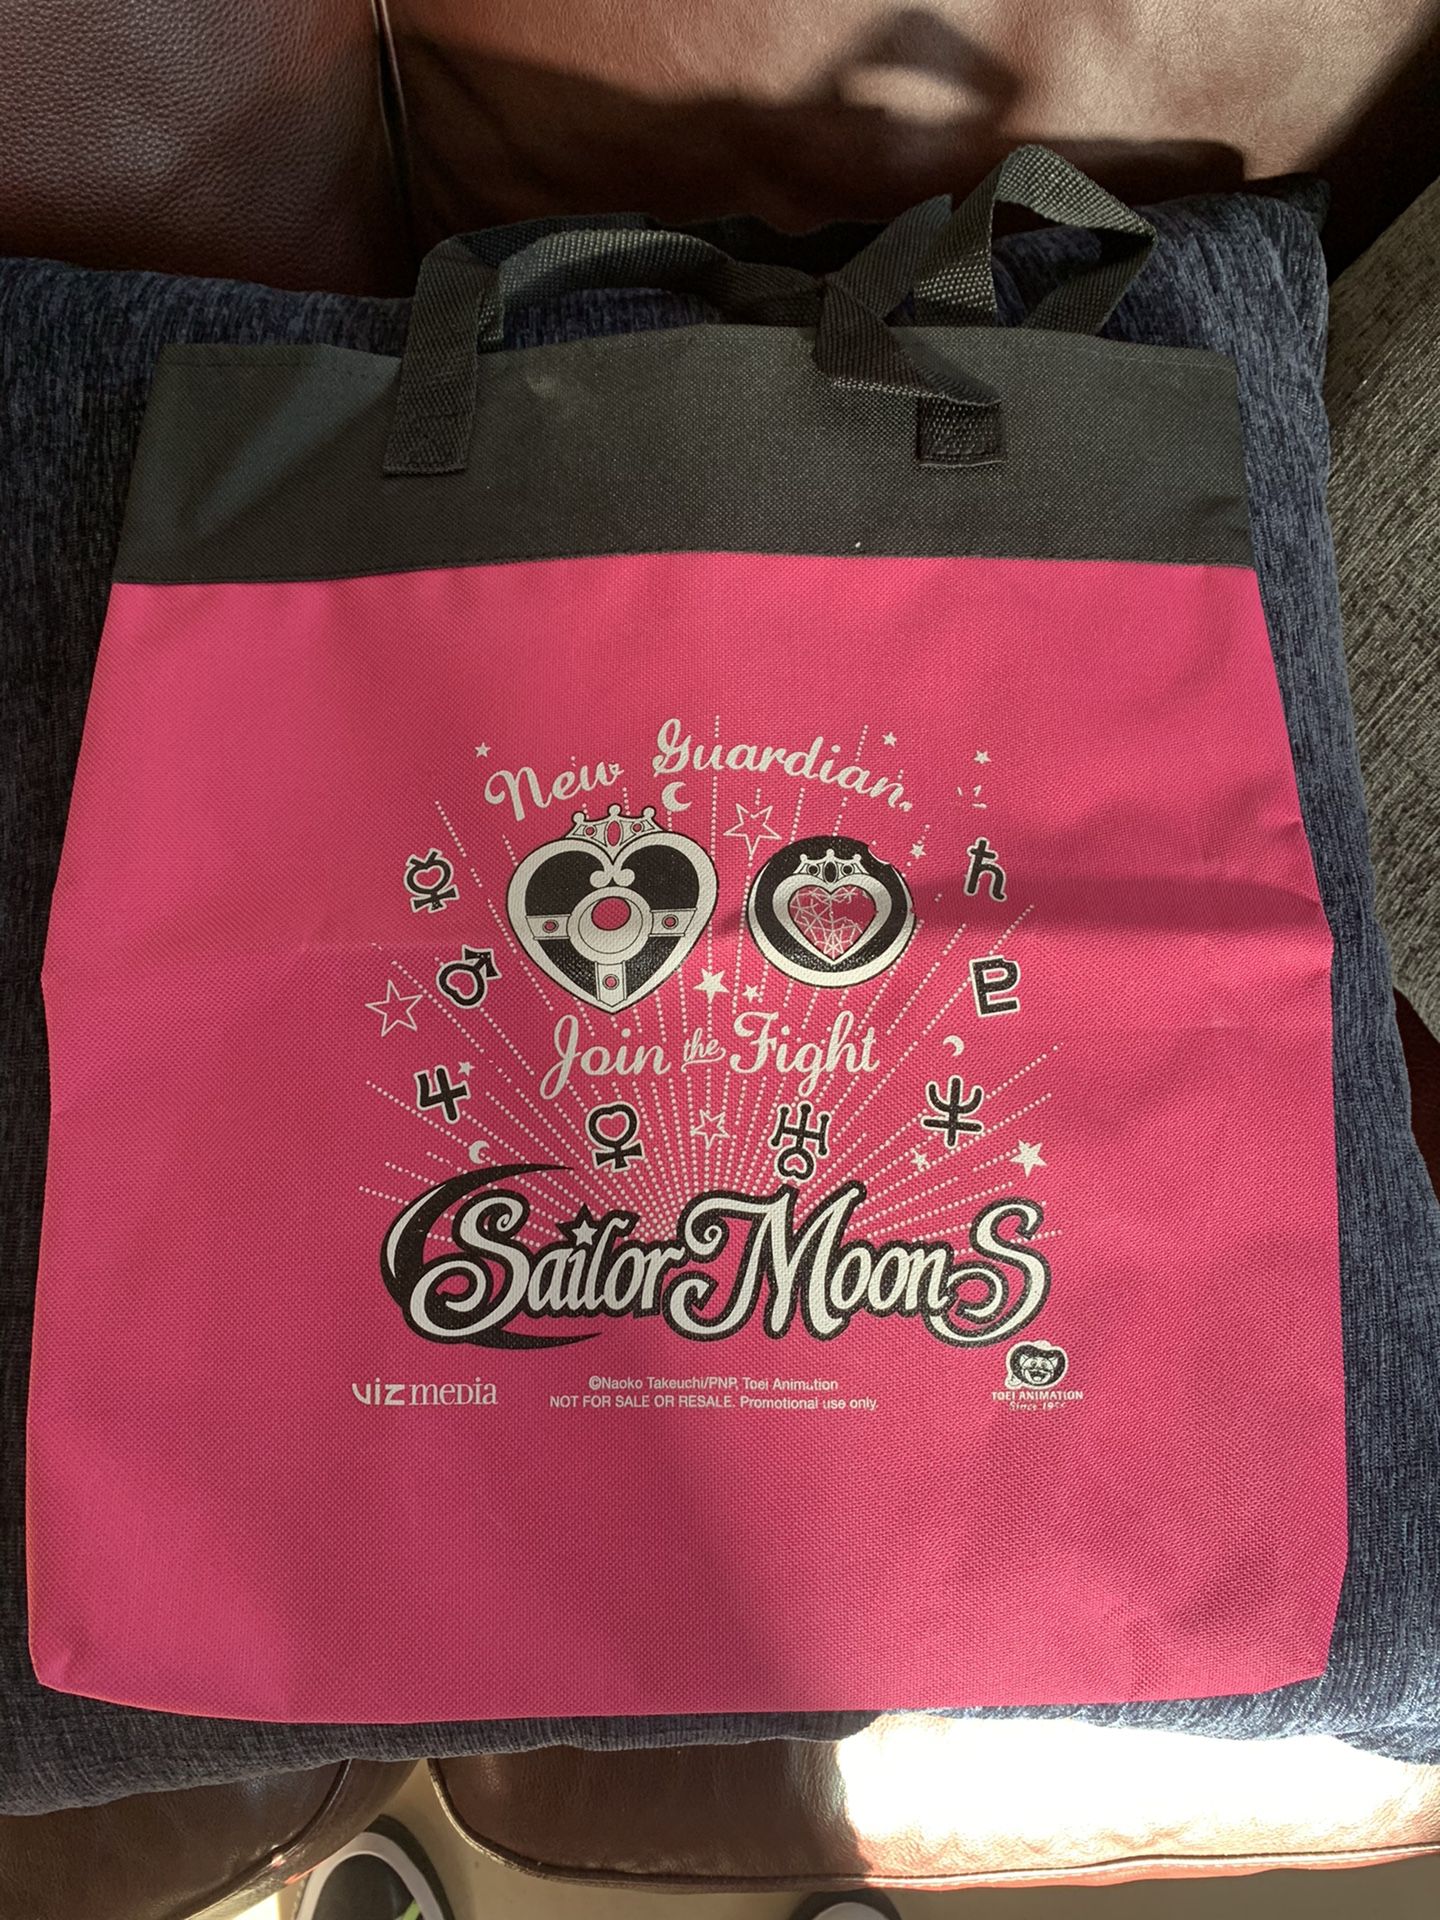 Viz Media Sailor moon Bag unused from Comic Con